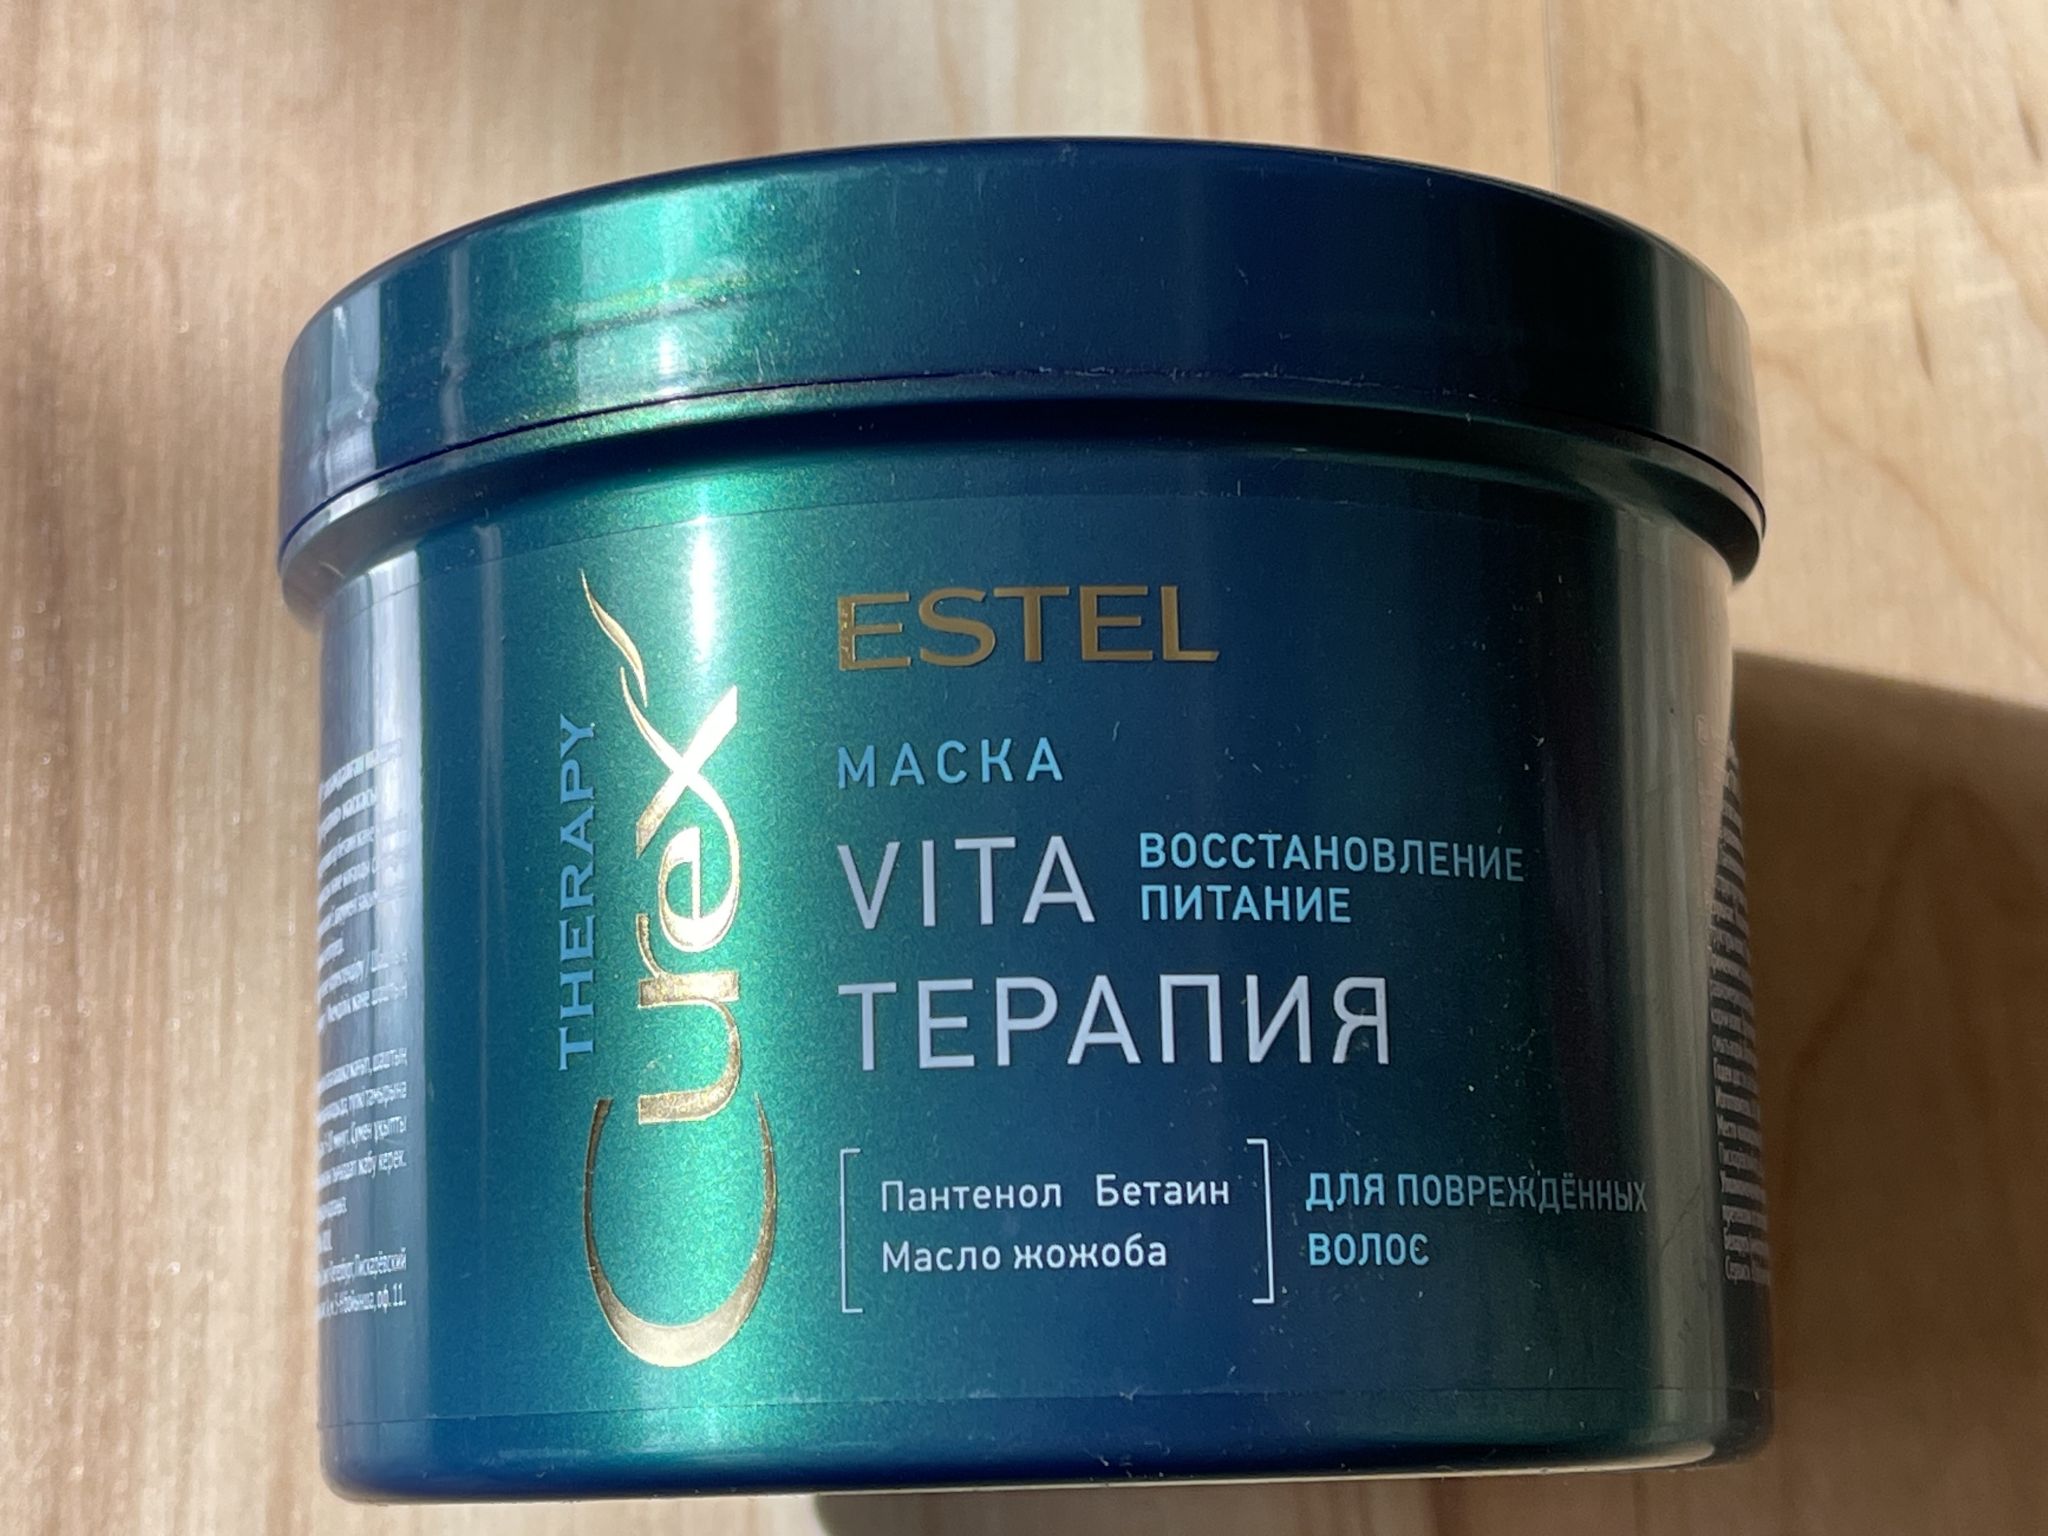 Маску estel vita. Estel Curex маска Vita терапия Therapy 500 мл. Маска "Vita-терапия" для повреждённых волос Curex Therapy (500 мл). Маска Эстель курекс.